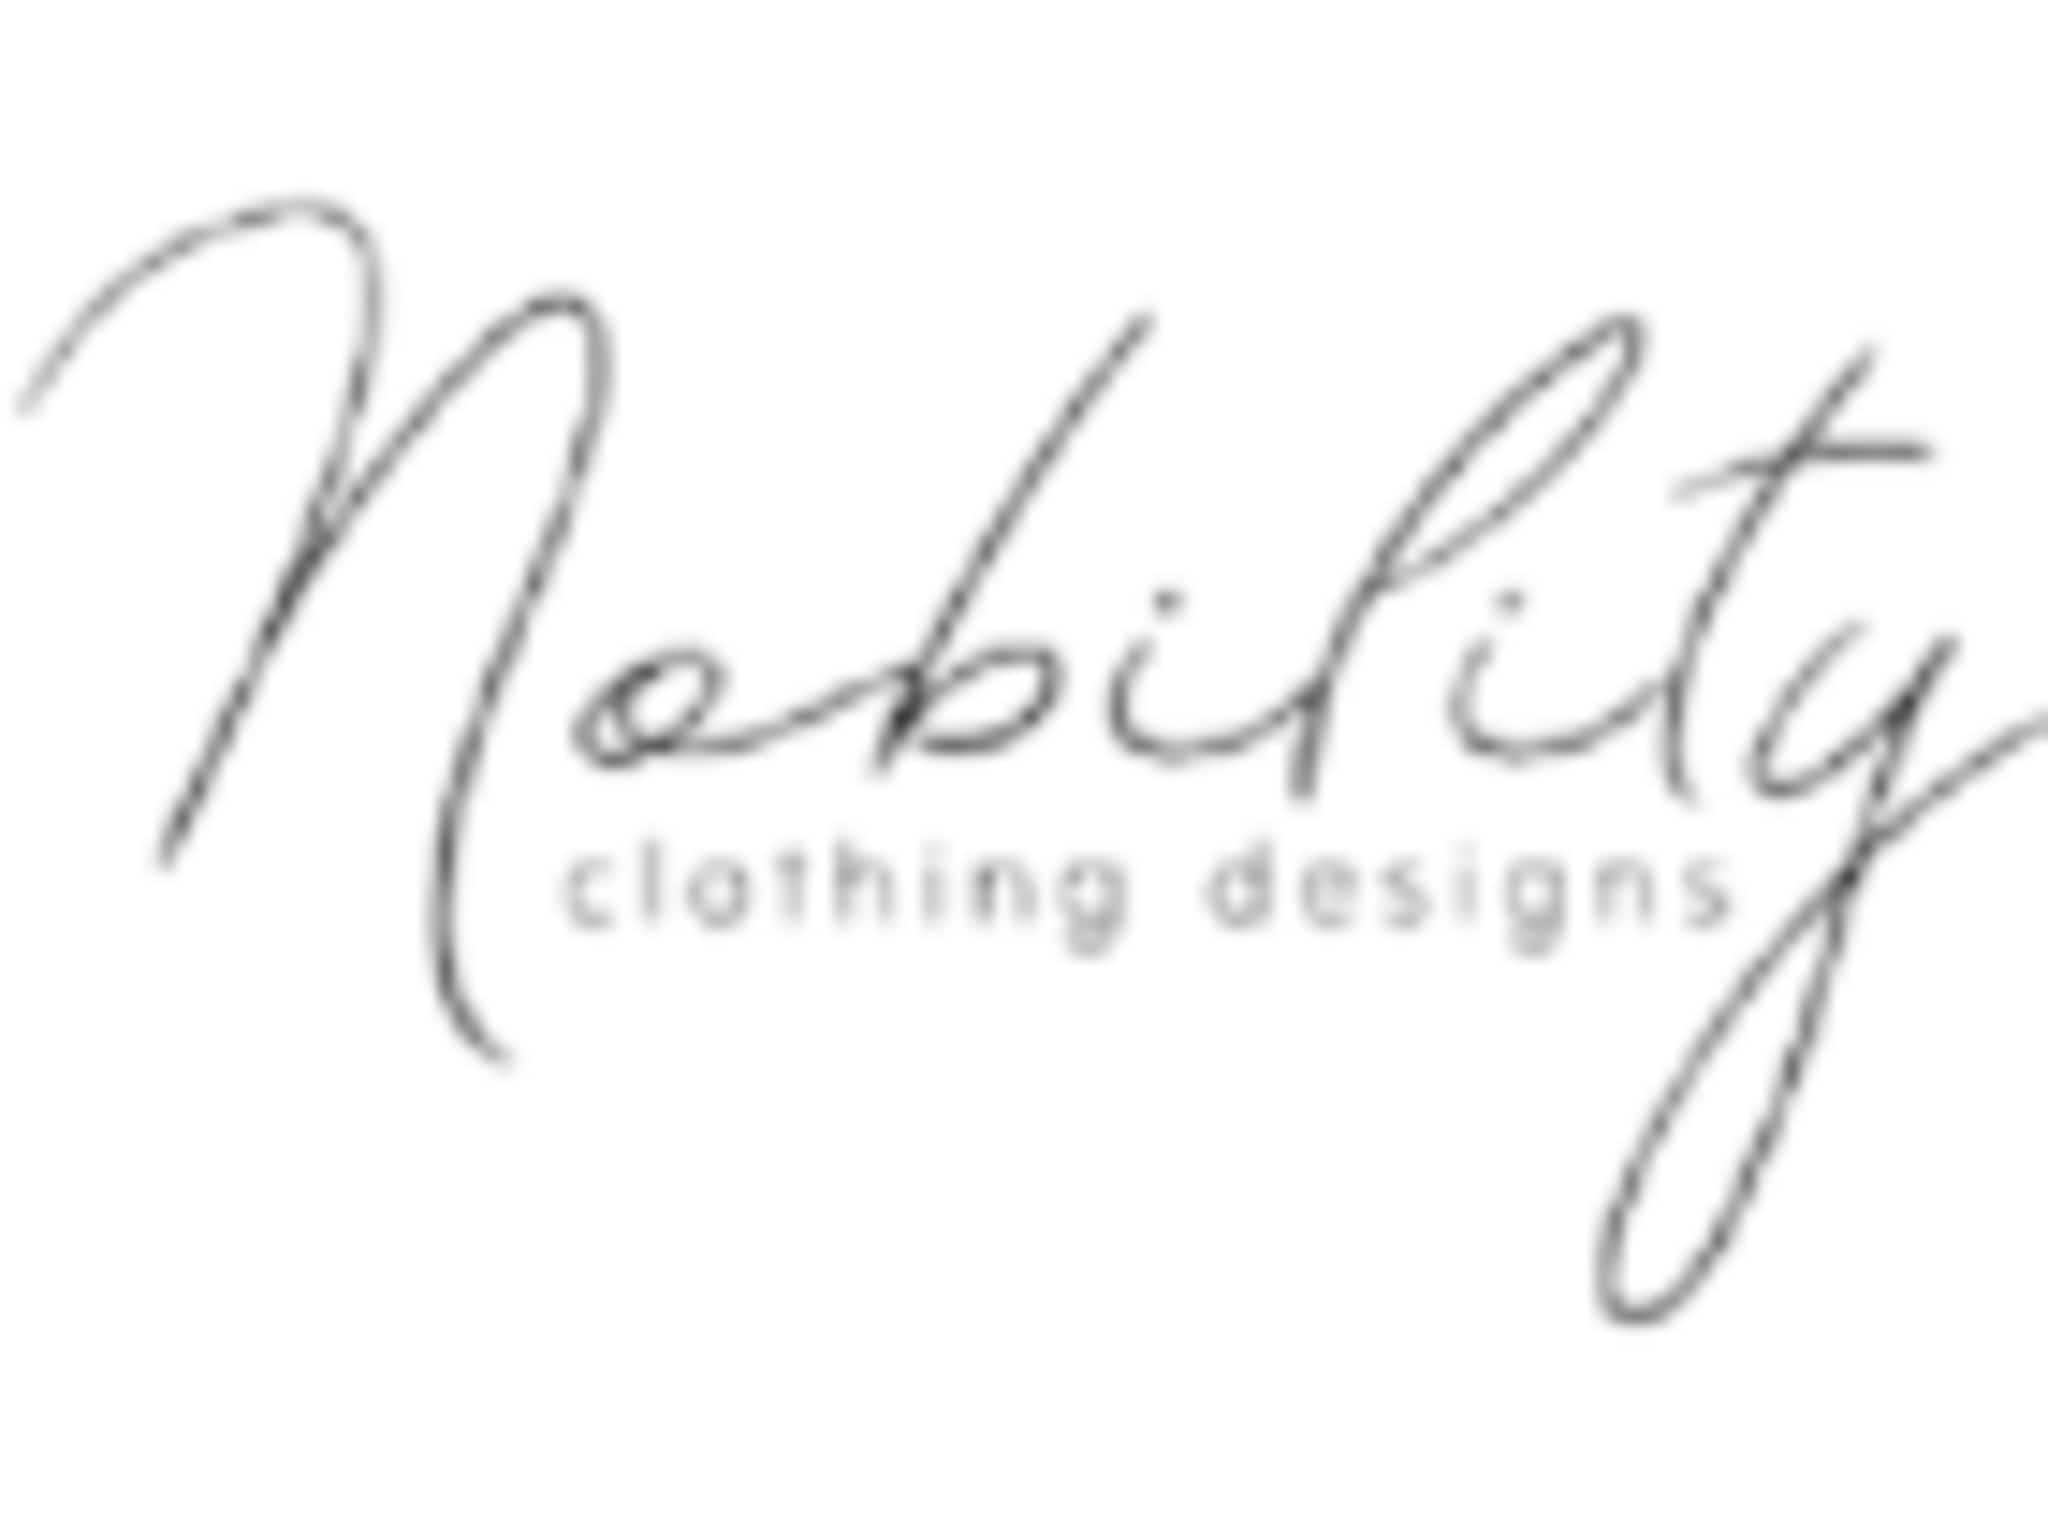 photo Nobility Clothing Designs